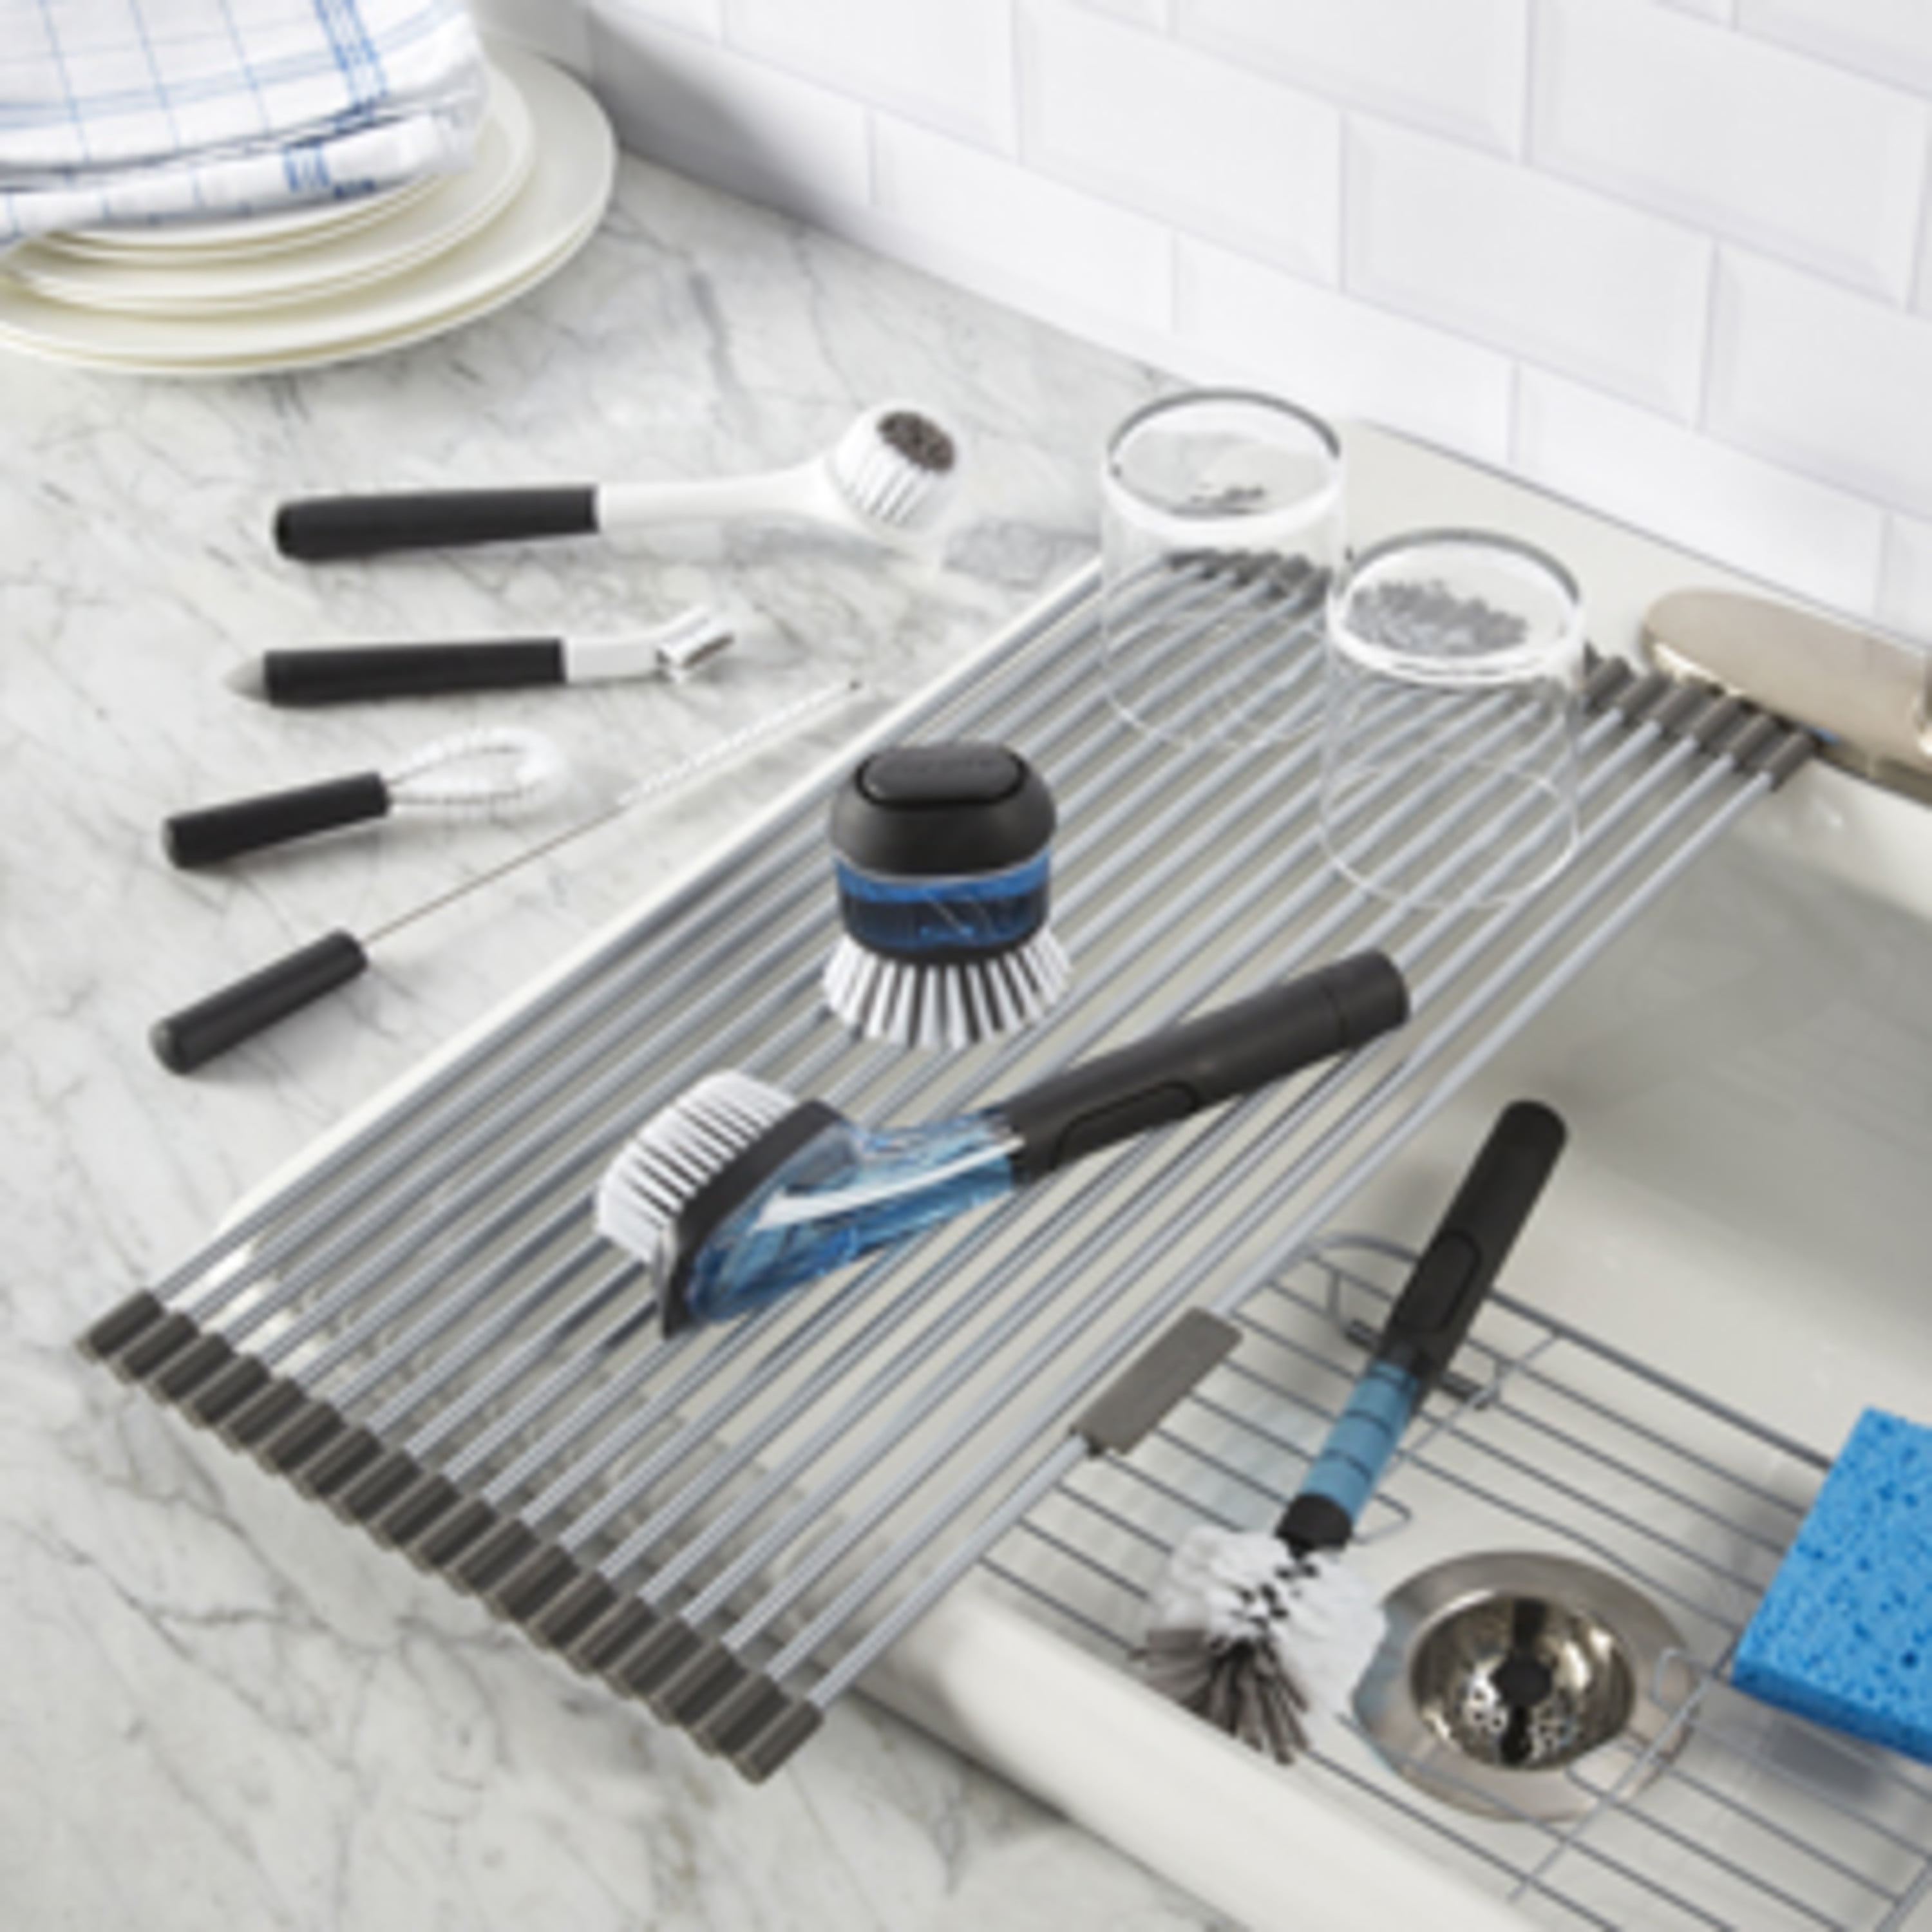 Kitchenaid Soap Dispensing Sink Brush in Black, Dishwasher Safe